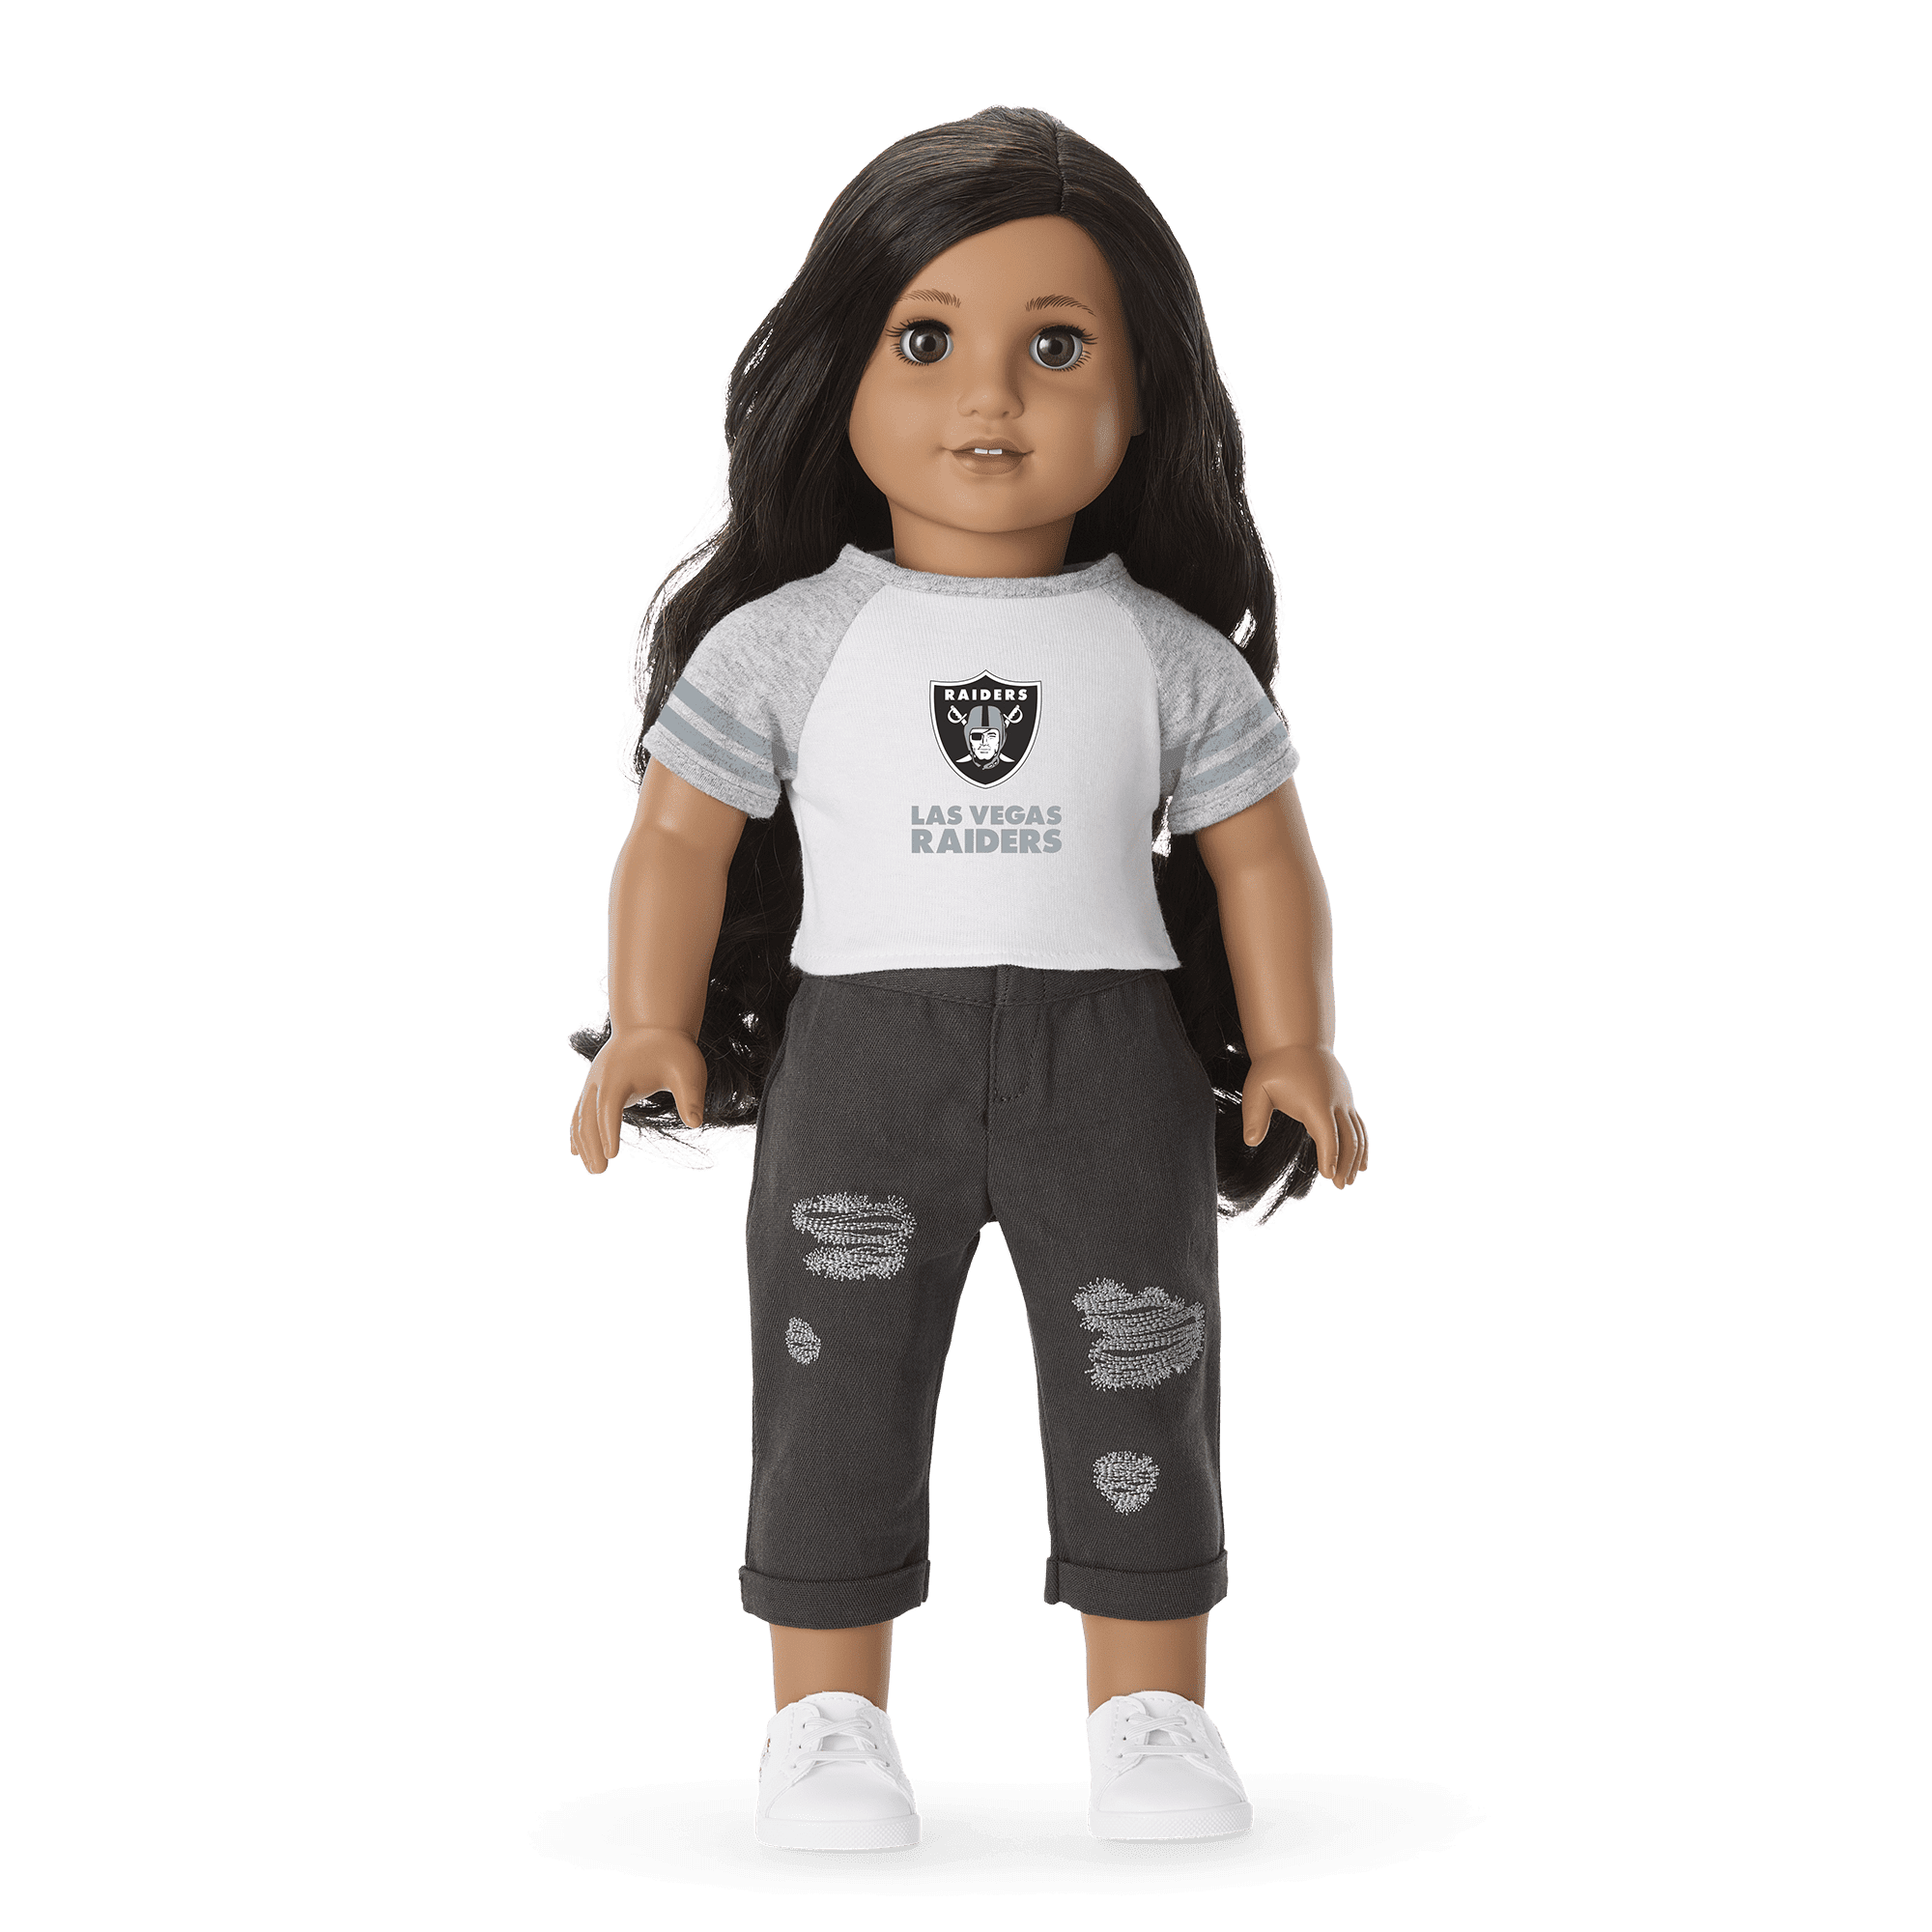 American Girl® x NFL Raiders Fan Tee for 18-inch Dolls